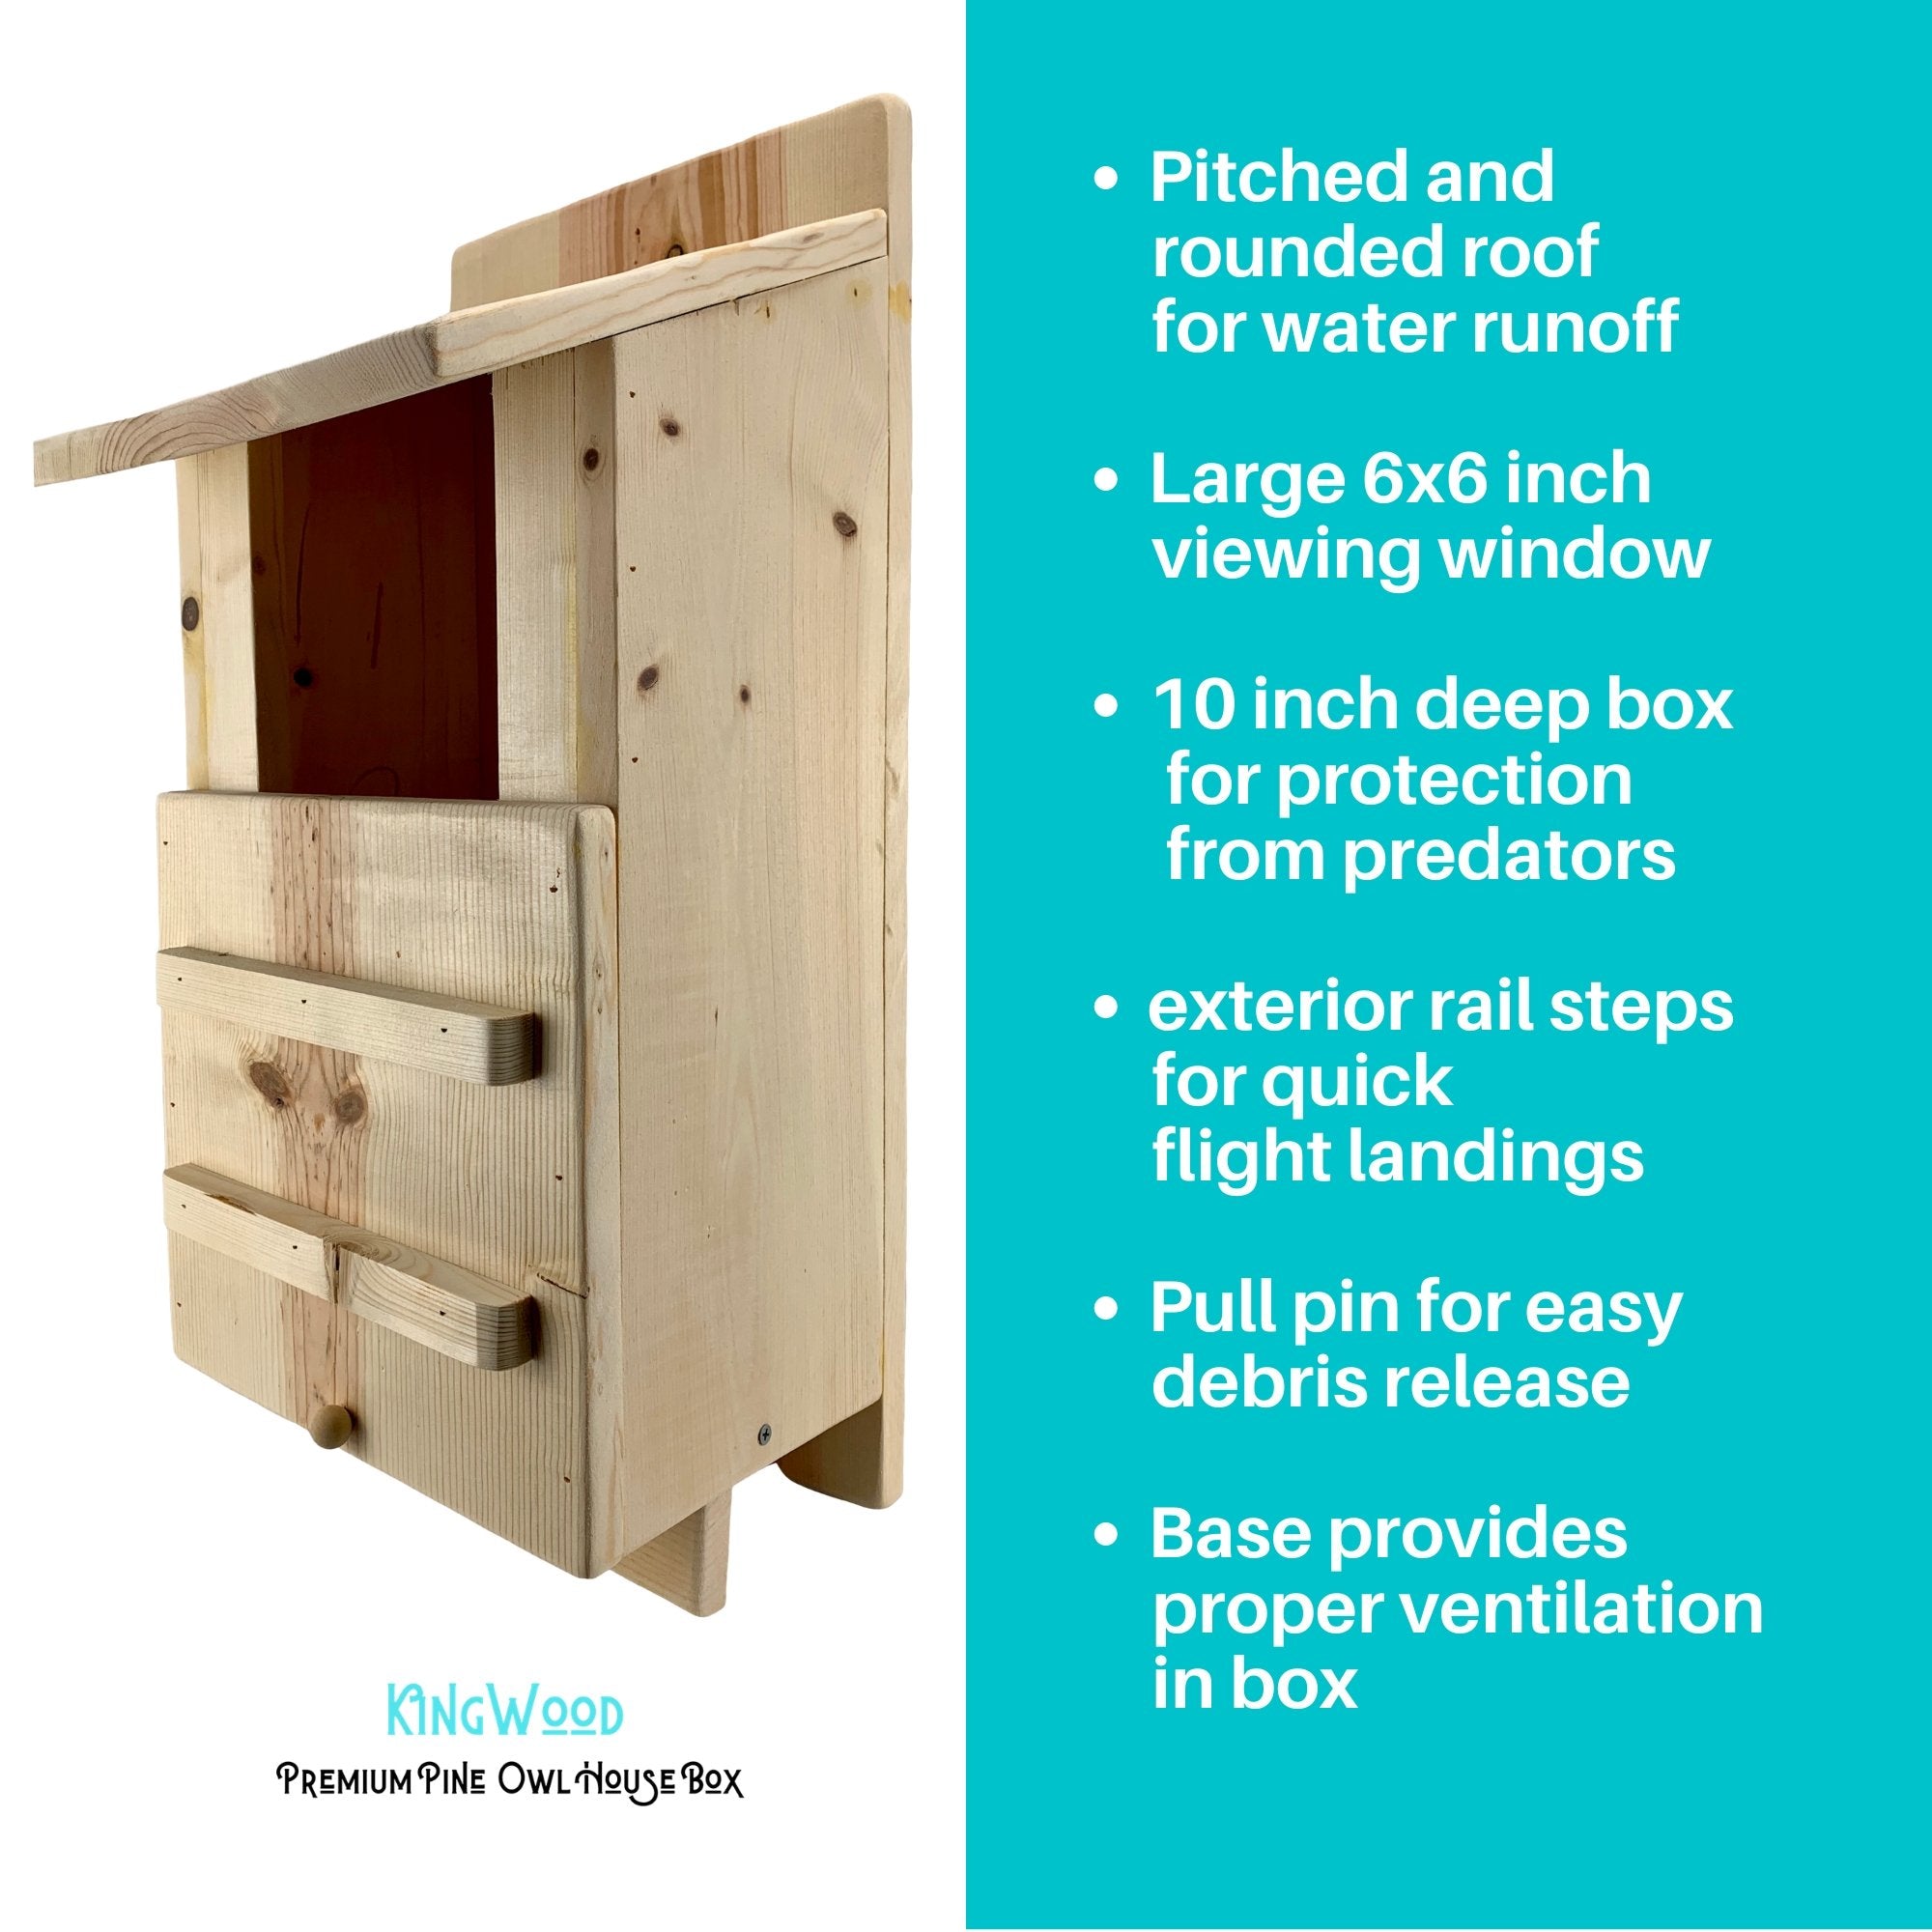 KingWood Premium Pine Owl House Box solid build